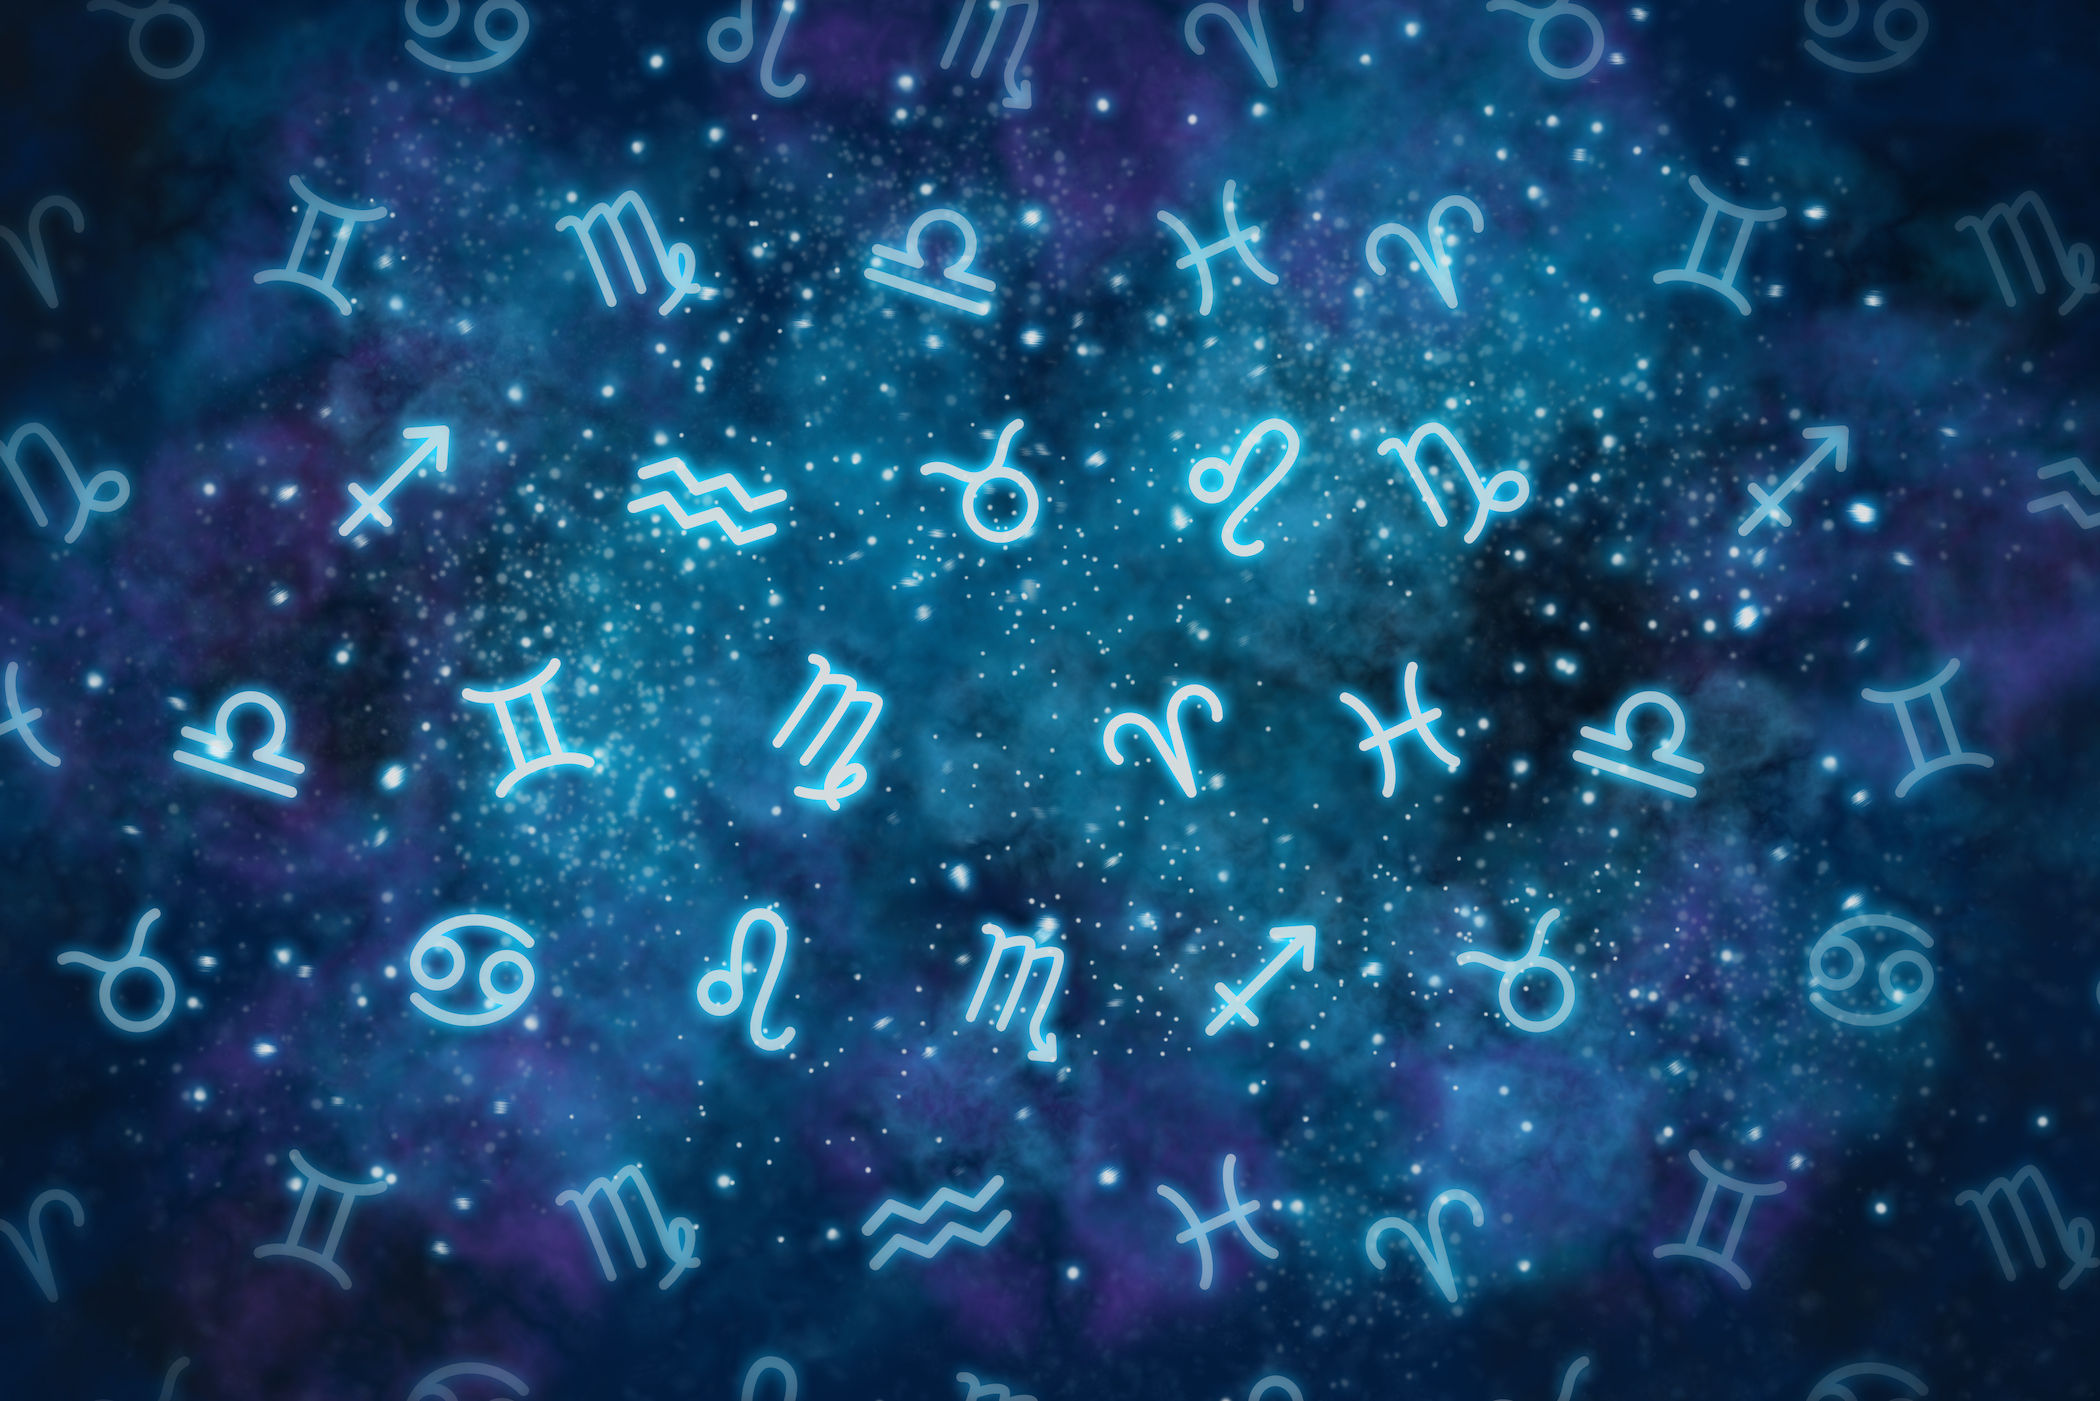 Zodiac's Air Signs: Aquarius, Gemini, Libra Traits, Explained